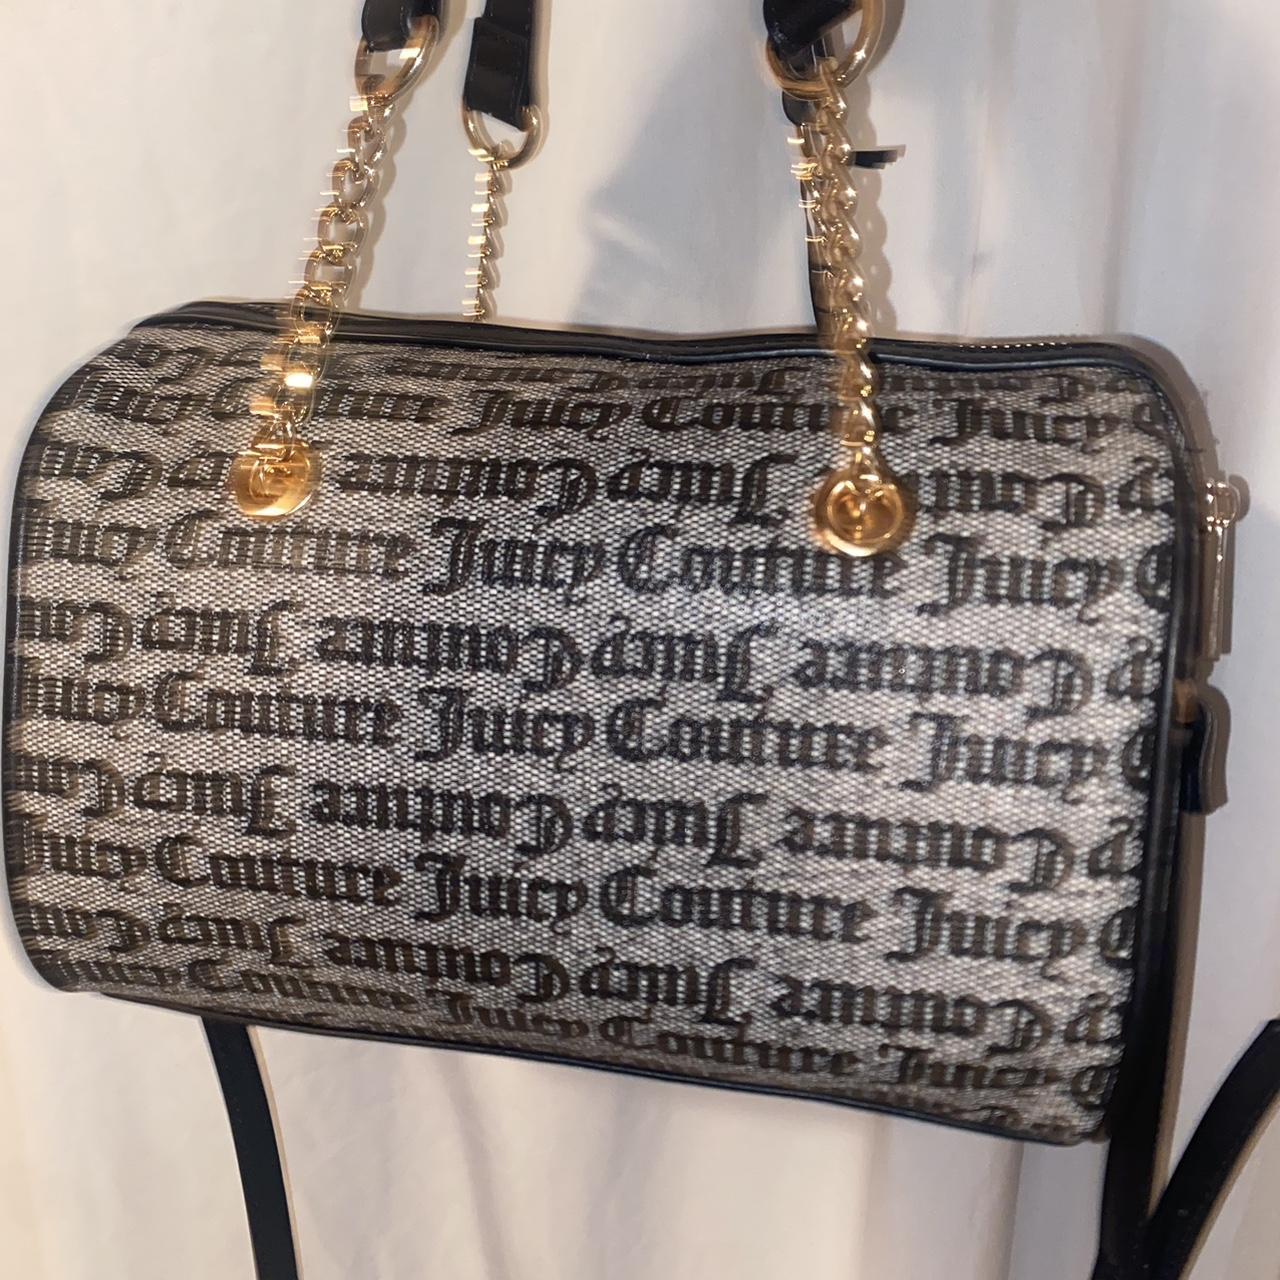 Juicy Couture “pop that lock” satchel purse, black... - Depop